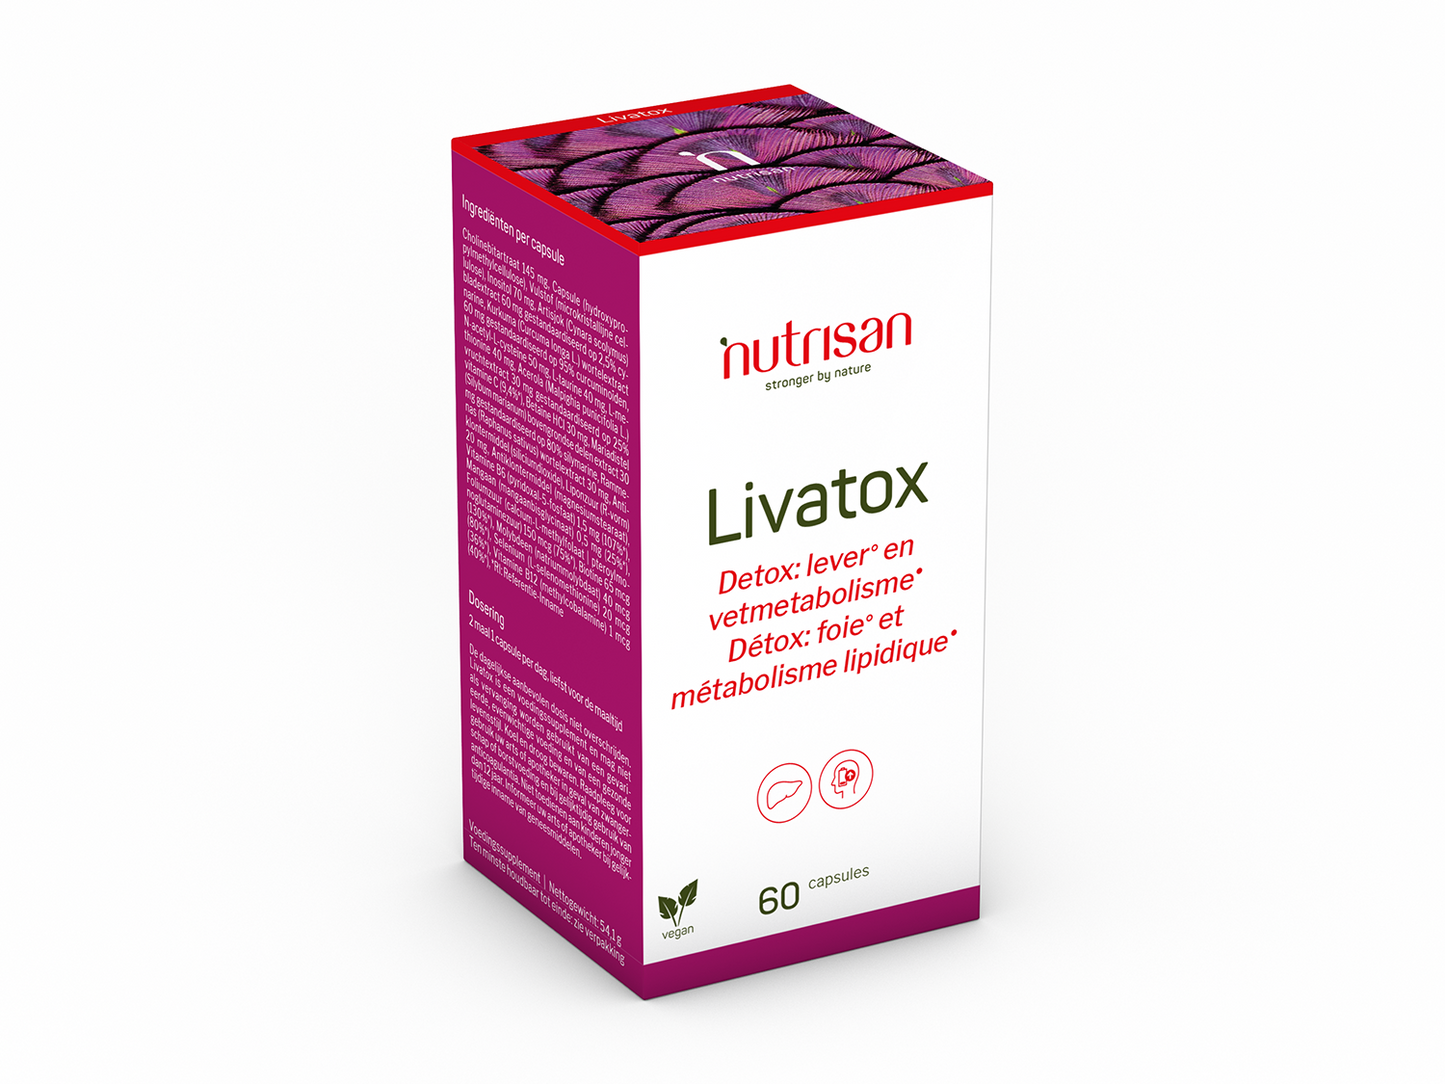 Nutrisan Livatox - 60 capsules - Supplement voor lever en vetmetabolisme